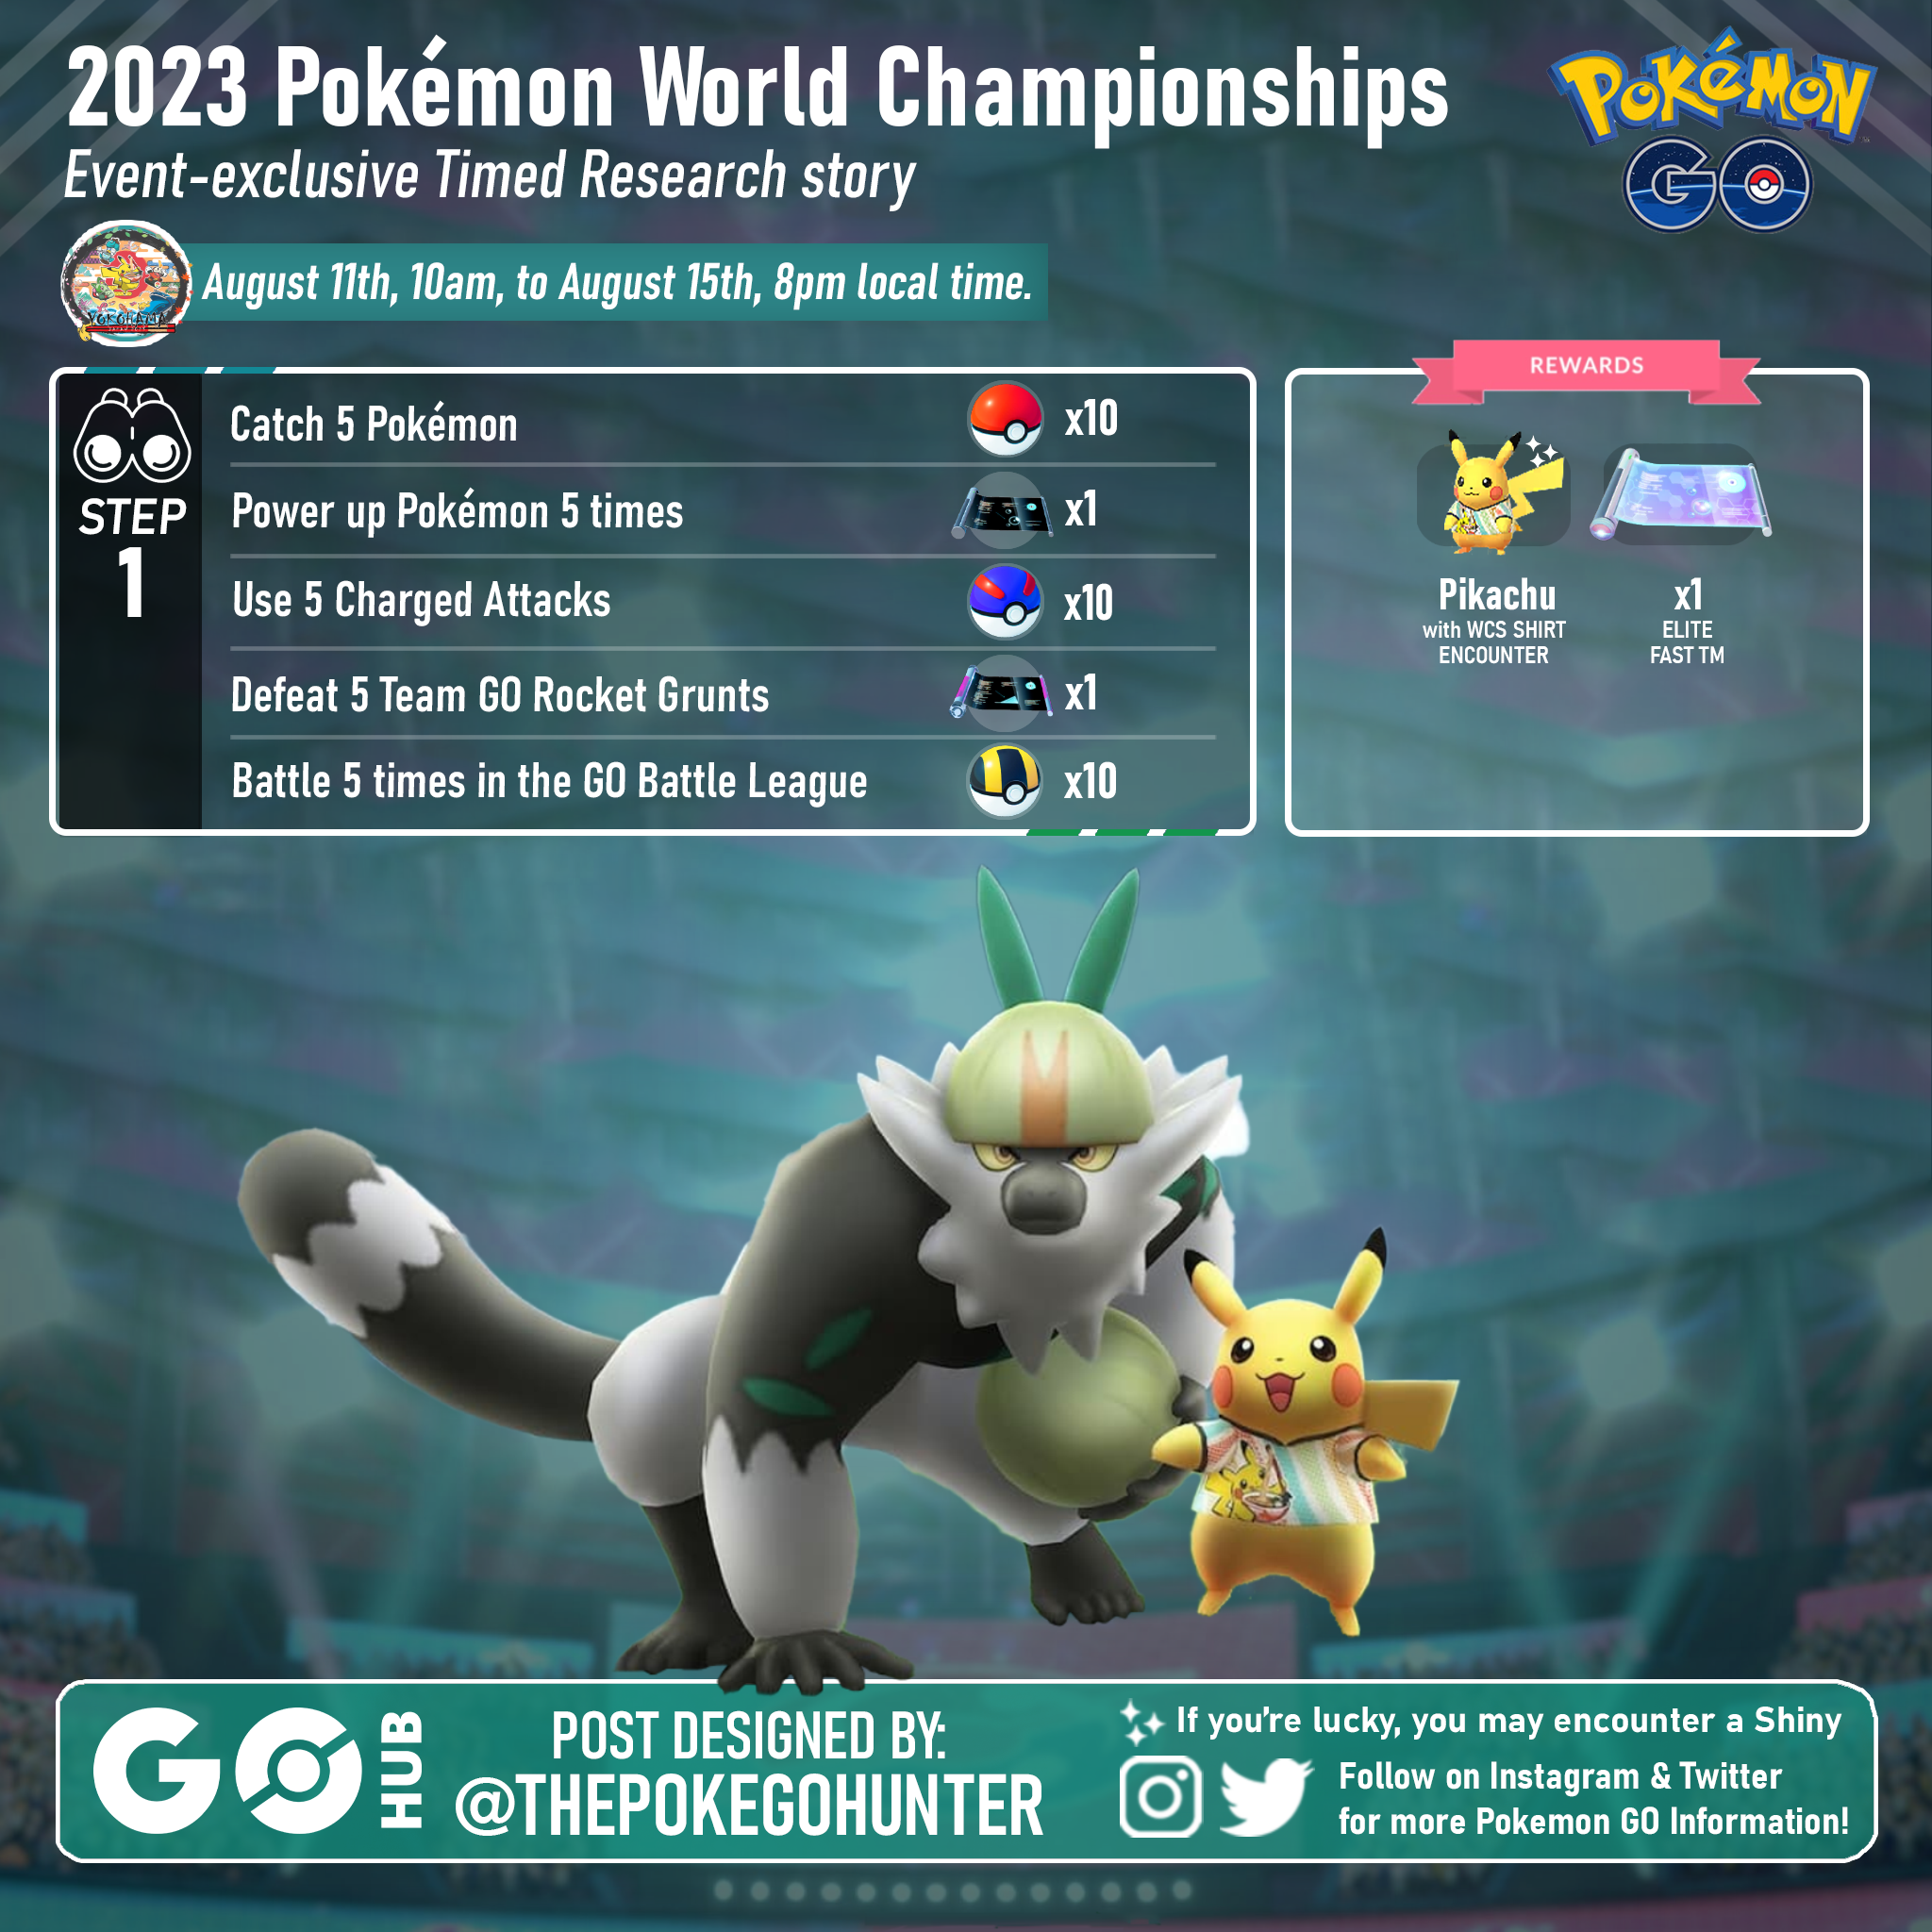 2023 Pokémon World Championships Event Results